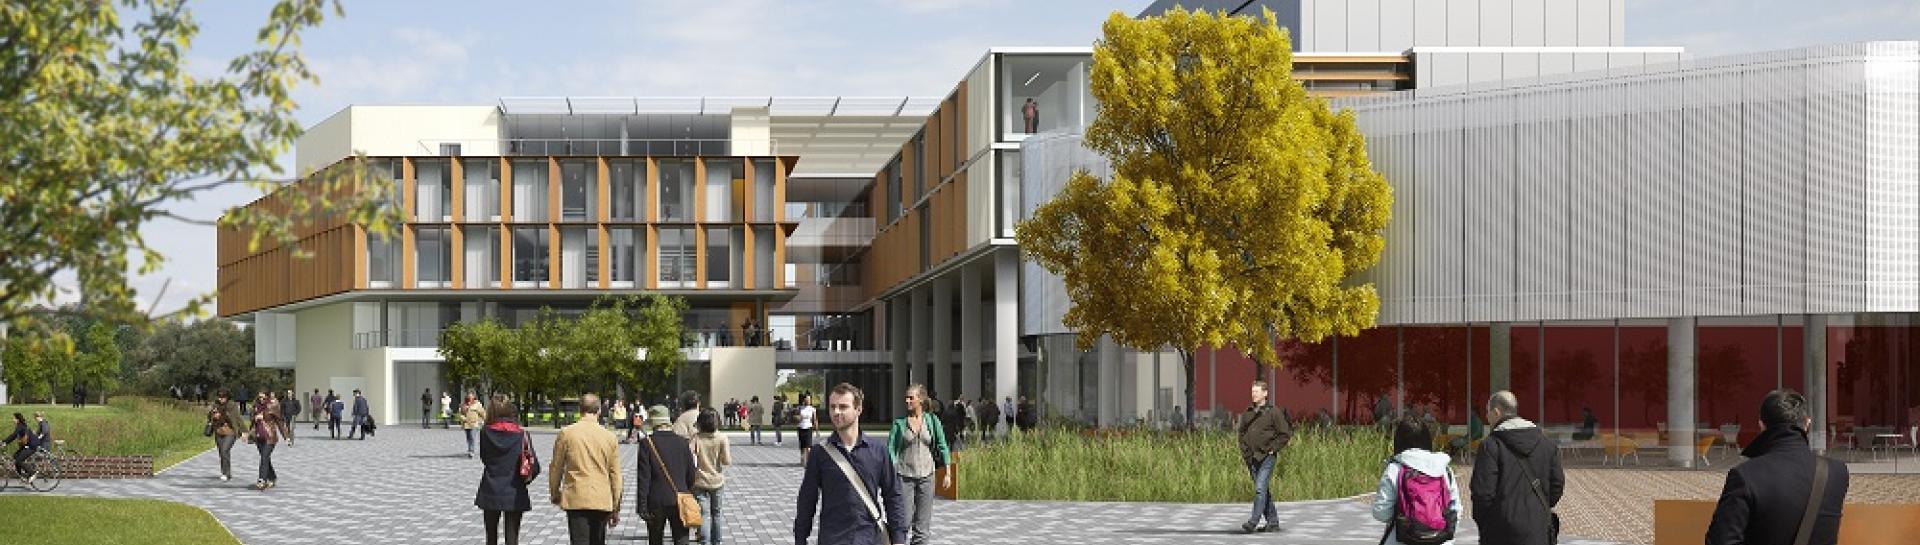 University of Northampton new Waterside Campus